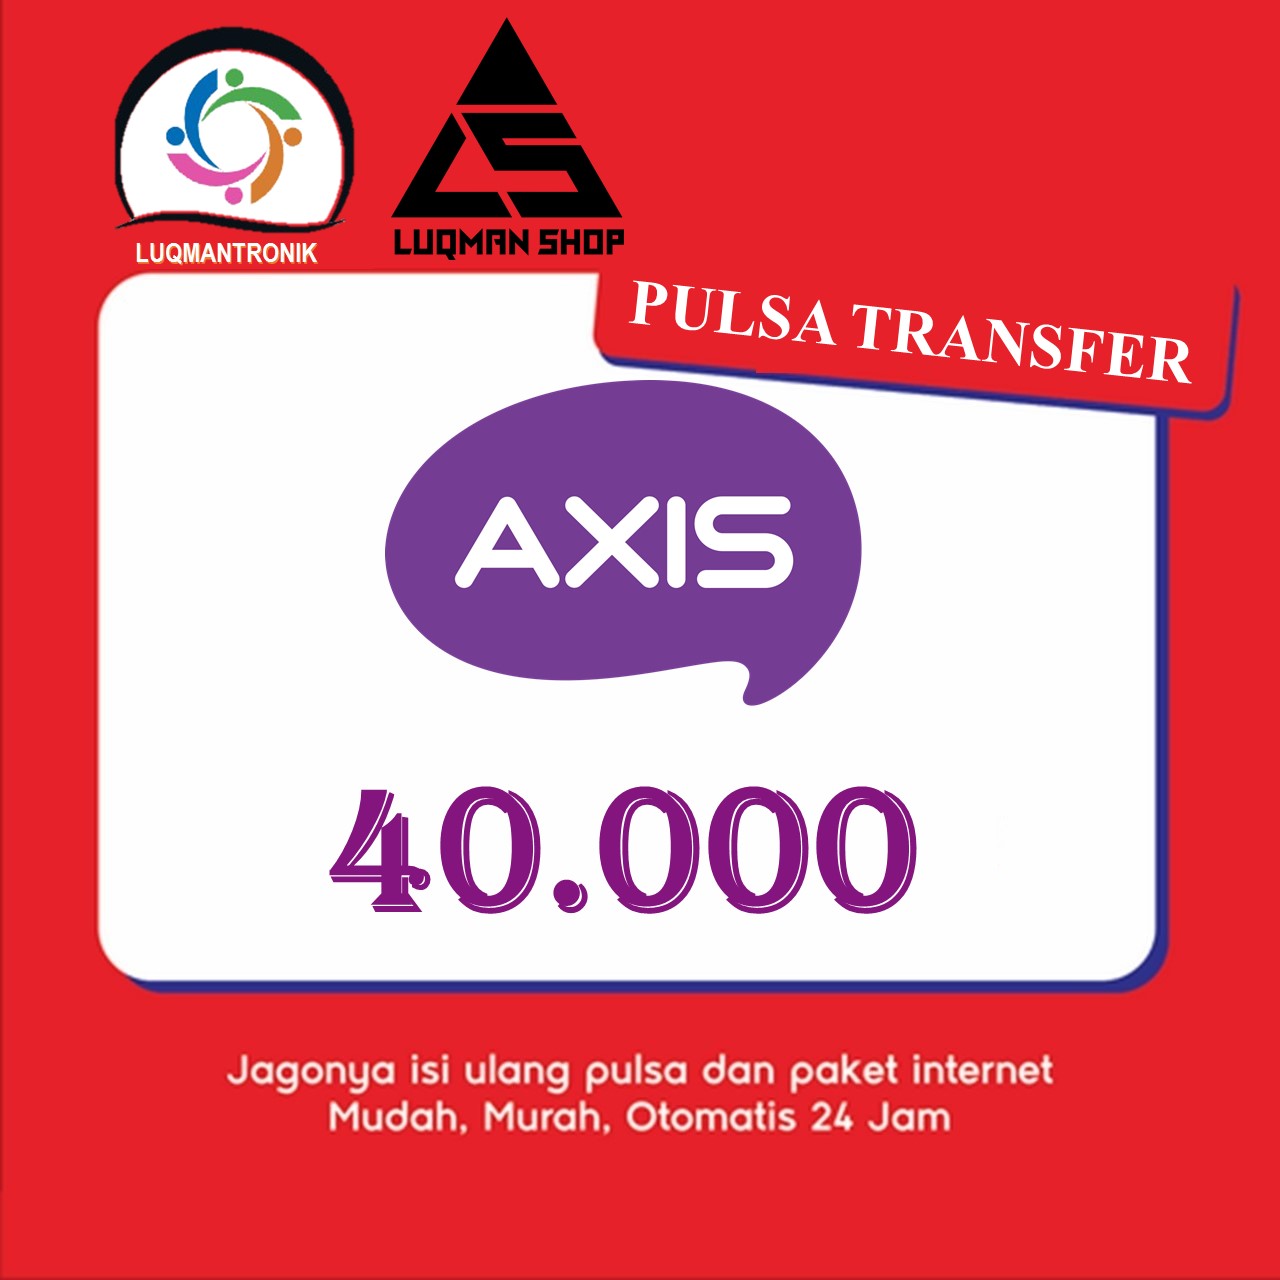 PULSA TRANSFER AXIS - PULSA TRANSFER AXIS 40.000